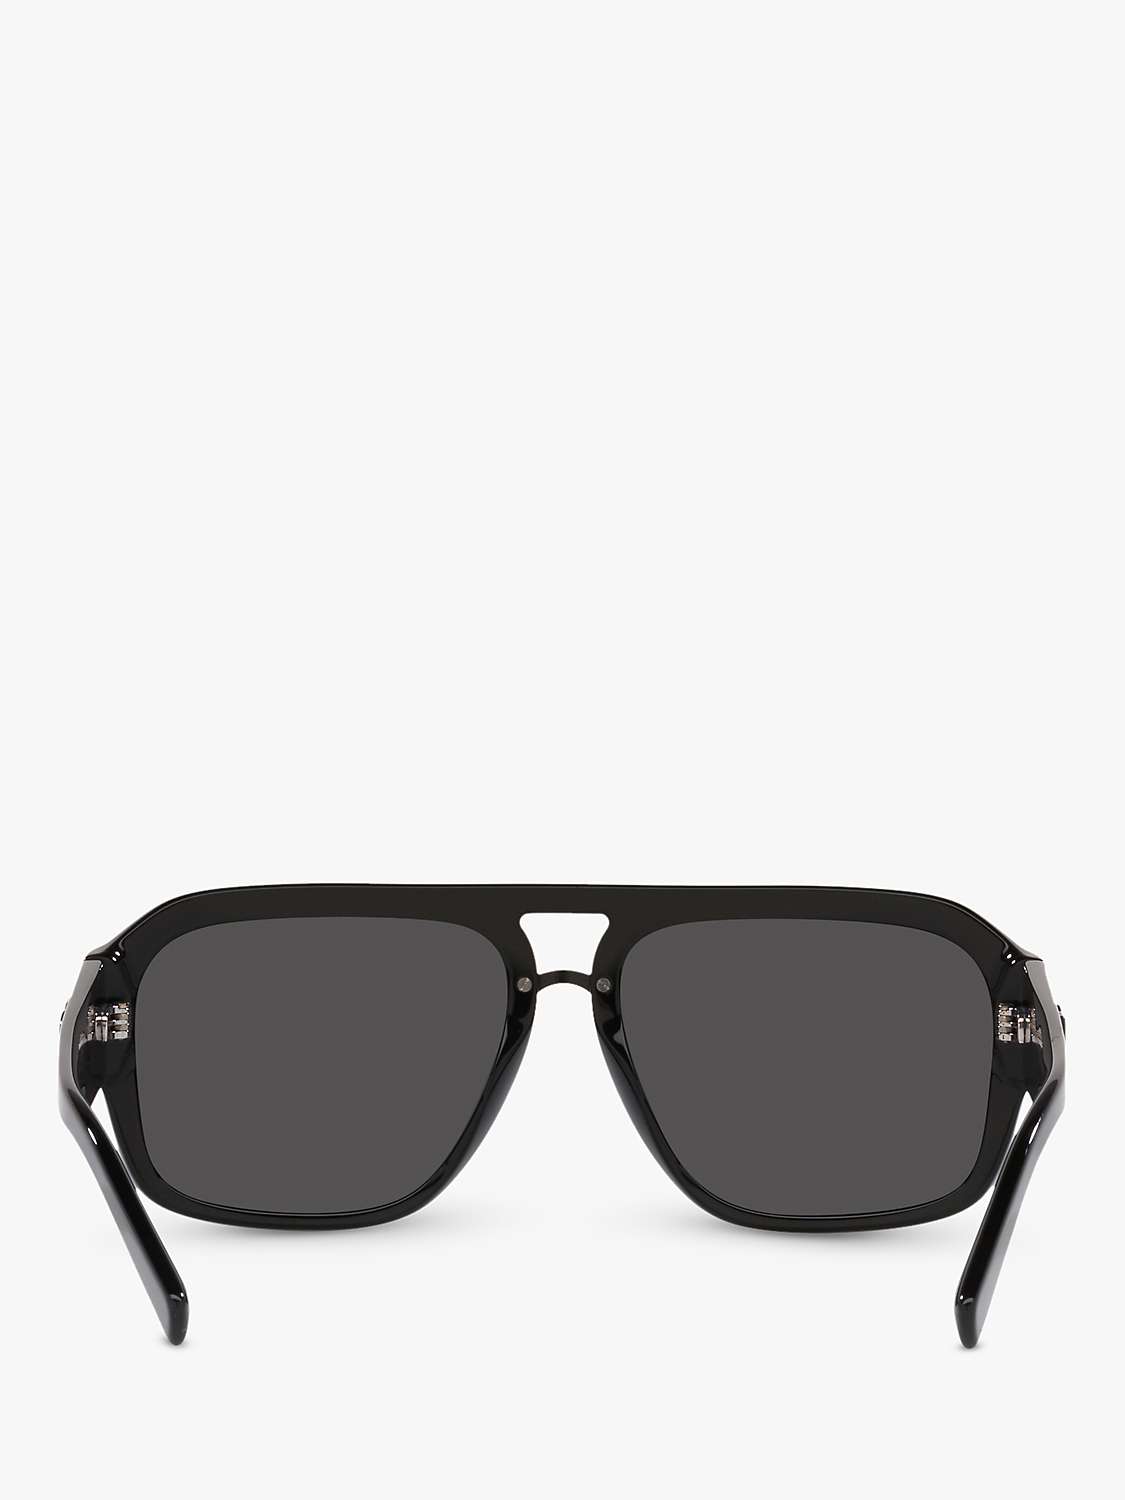 Buy Dolce & Gabbana DG4403 Men's Aviator Sunglasses, Black/Grey Online at johnlewis.com